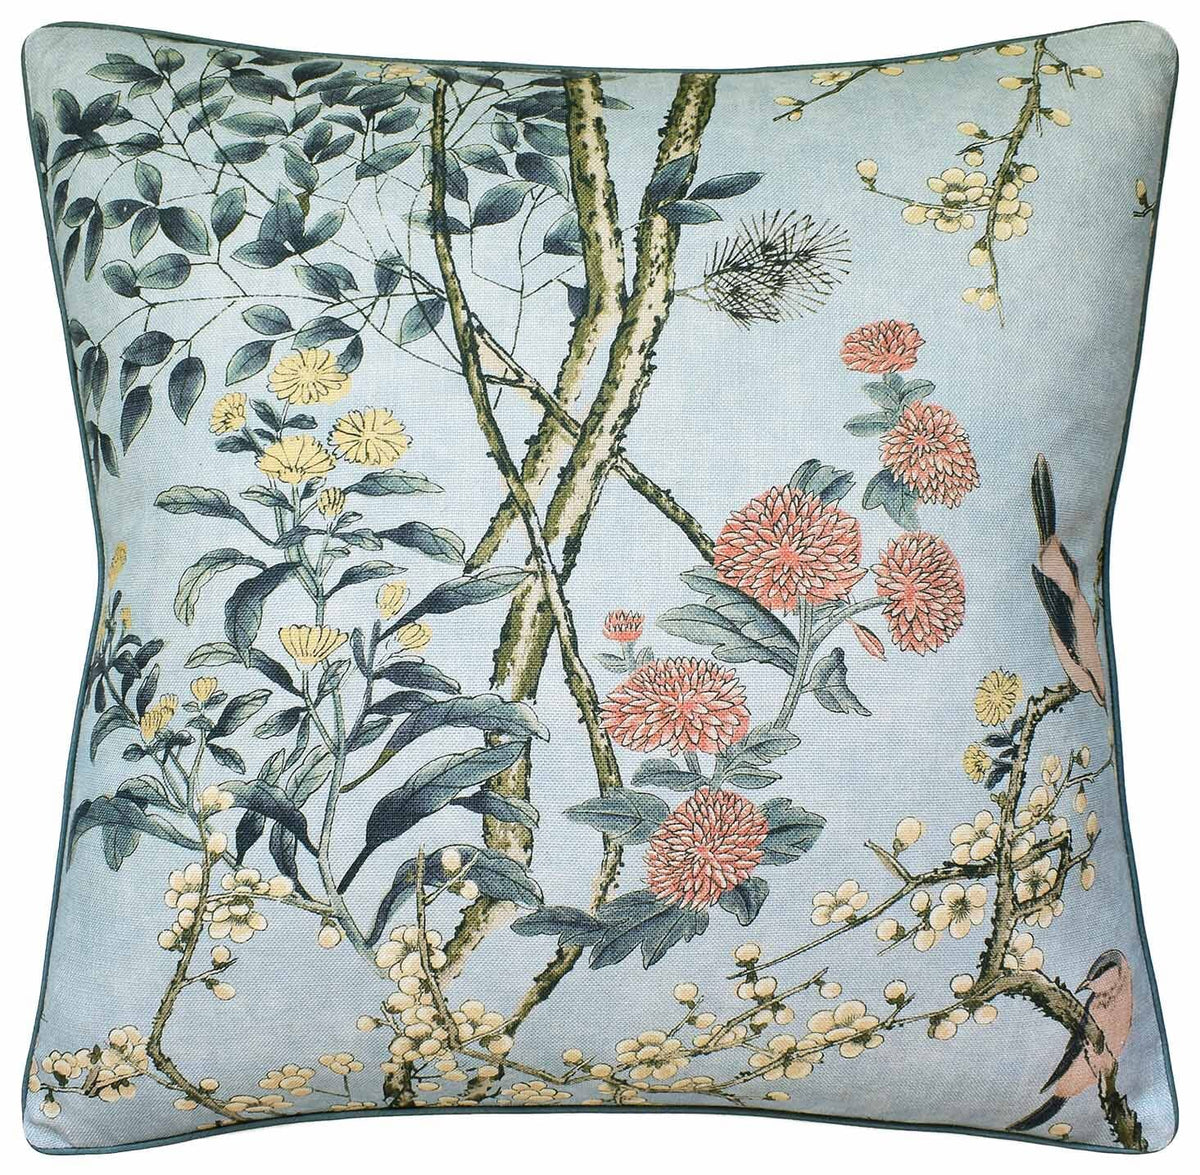 Katsura Mist Decorative Pillow - Throw Pillow by Ryan Studio made from Thibaut Fabrics